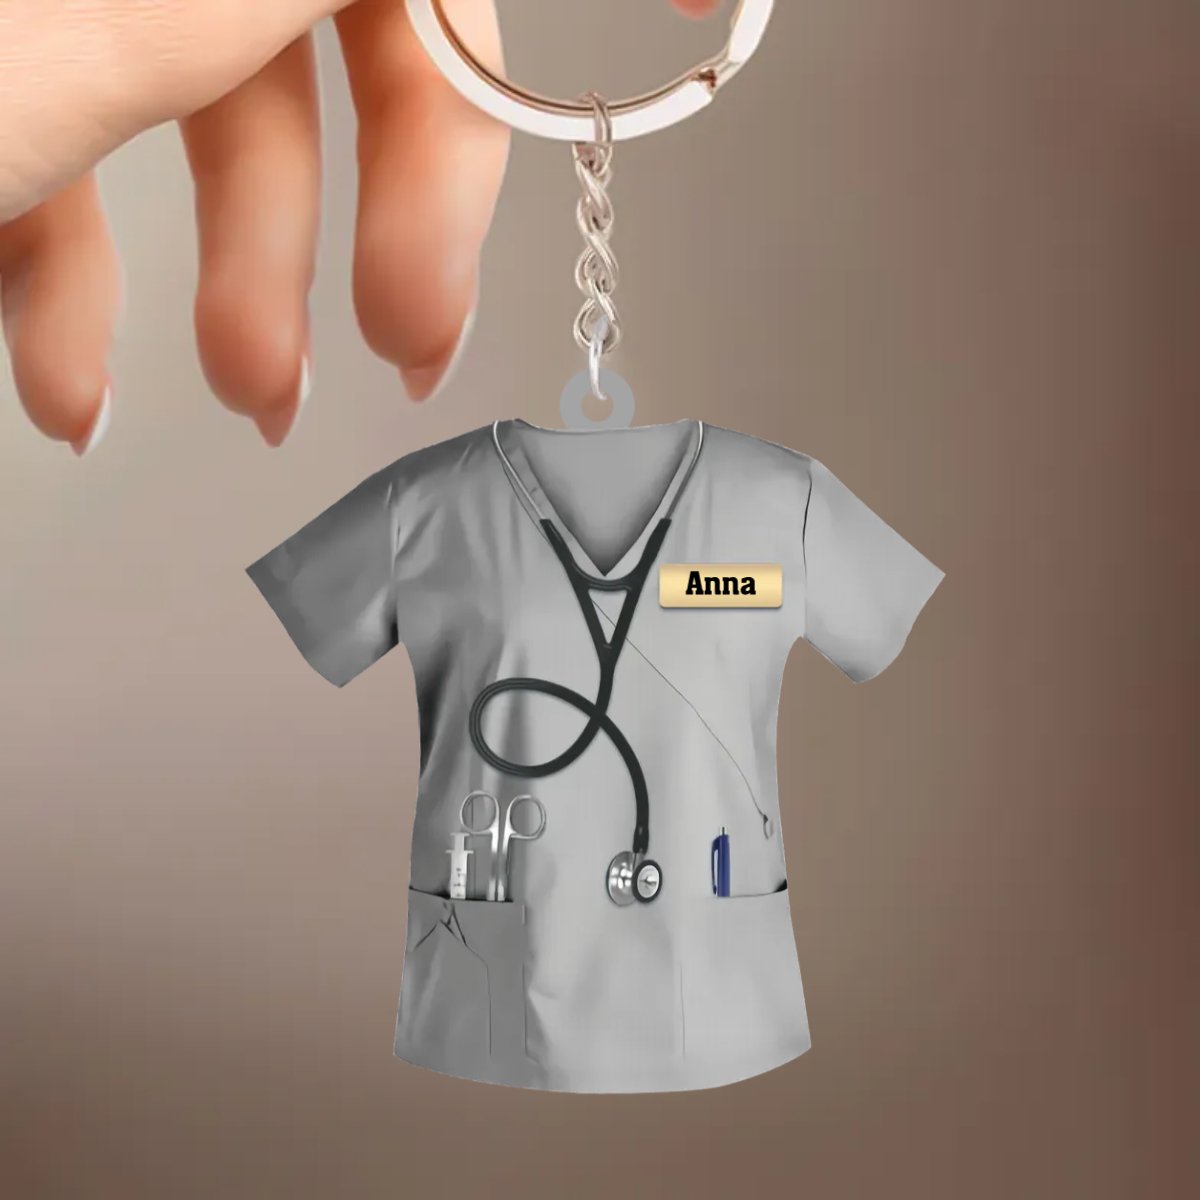 Nurse - Gift For Nurse - Personalized Nurse Uniform Keychain - The Next Custom Gift